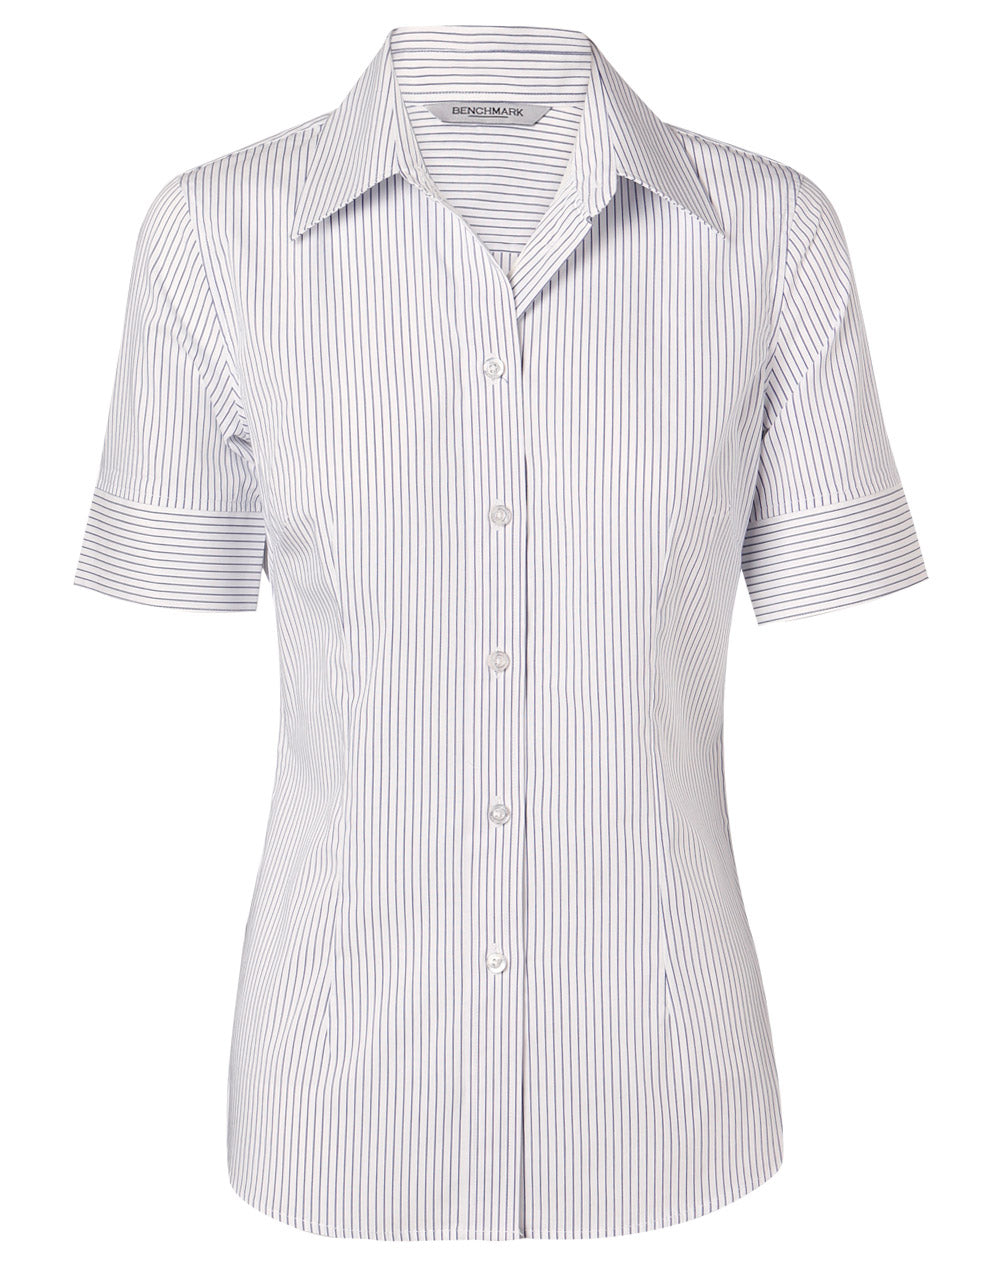 Winning Spirit -Women's Ticking Stripe Short Sleeve Shirt- M8200S